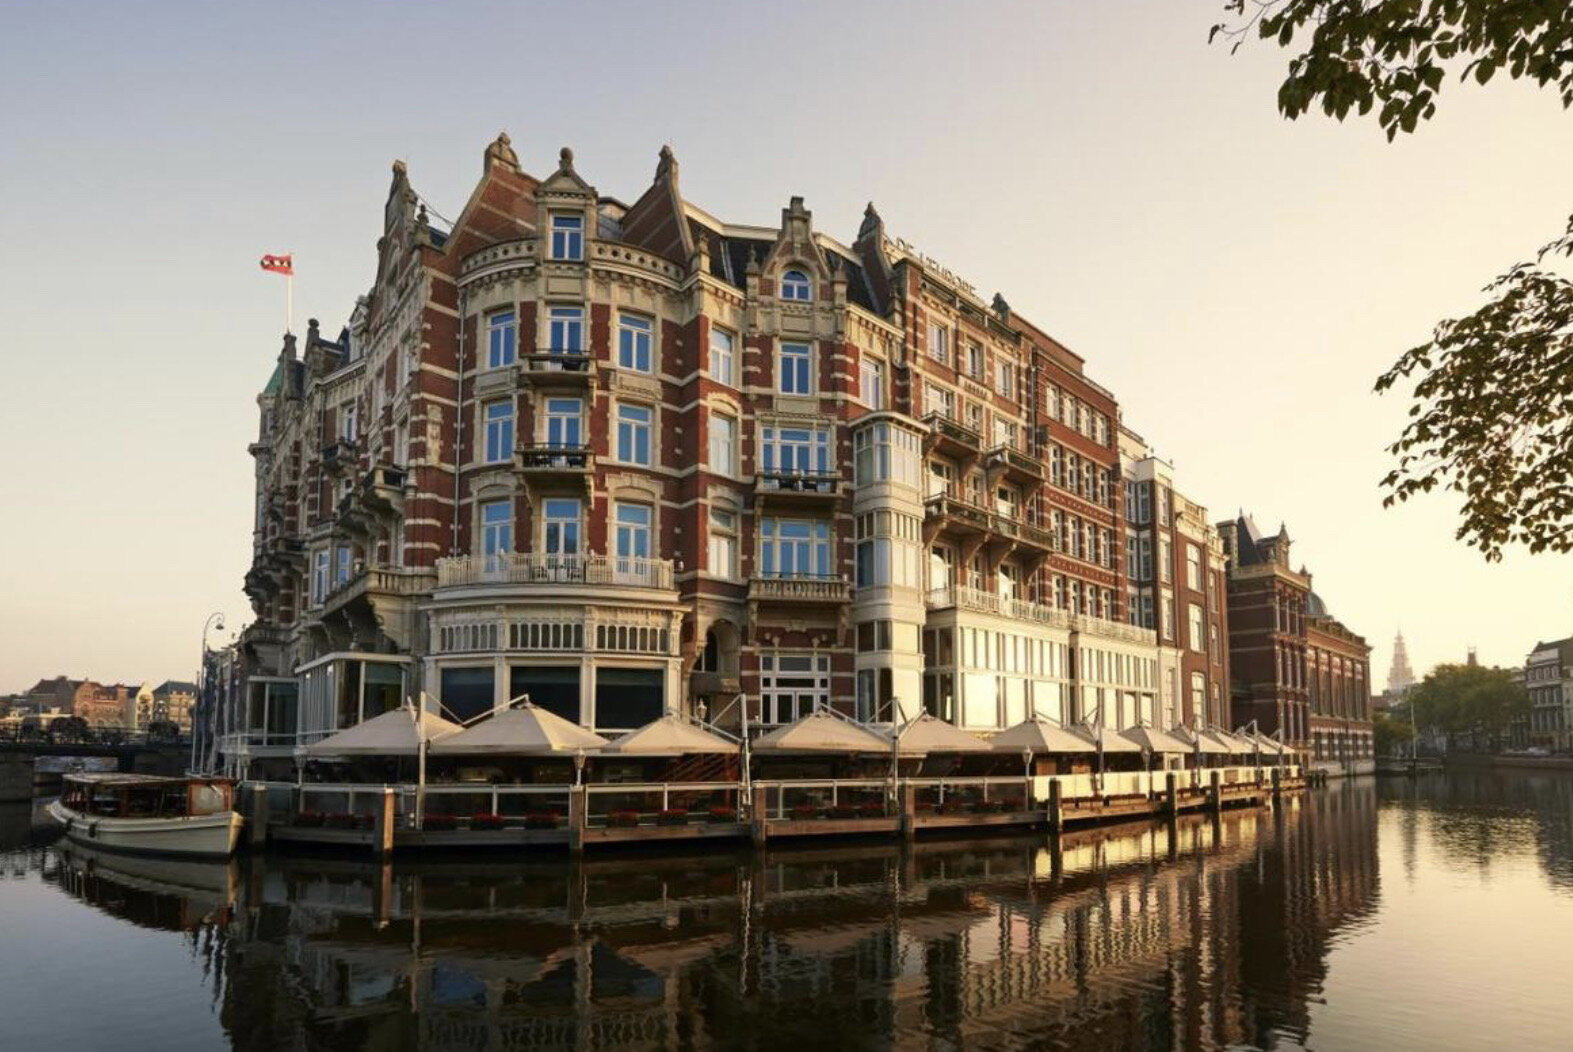 Luxury Independent Escort Dates in Amsterdam with Maya.